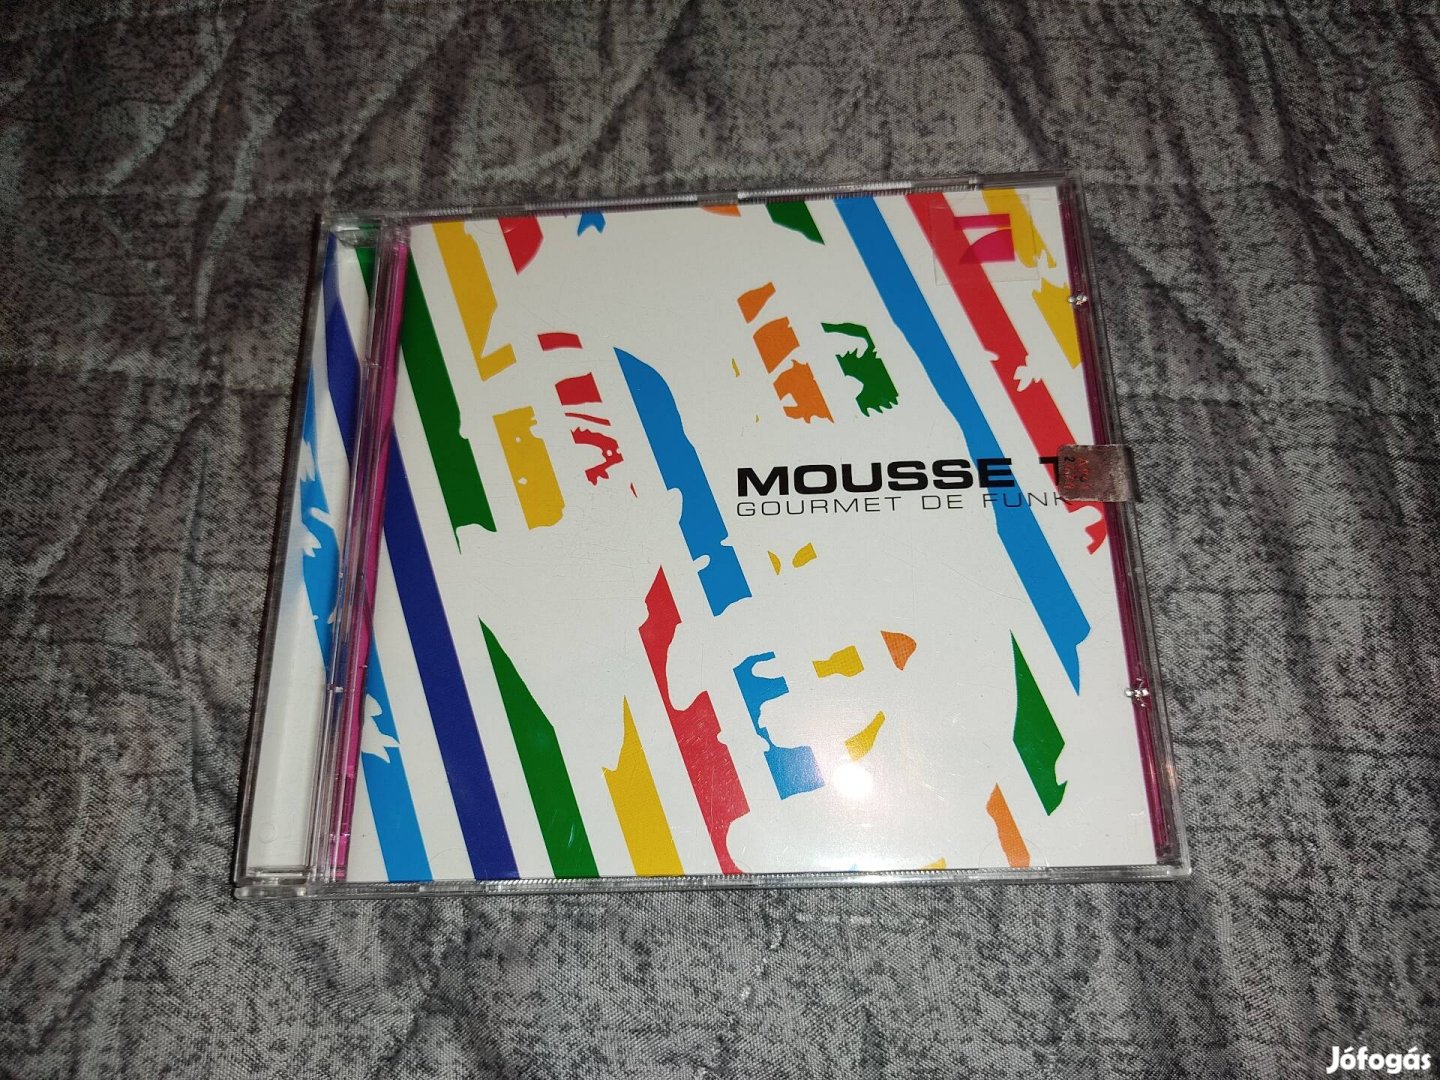 Mousse T - Gourmet The Funk CD (újszerű)